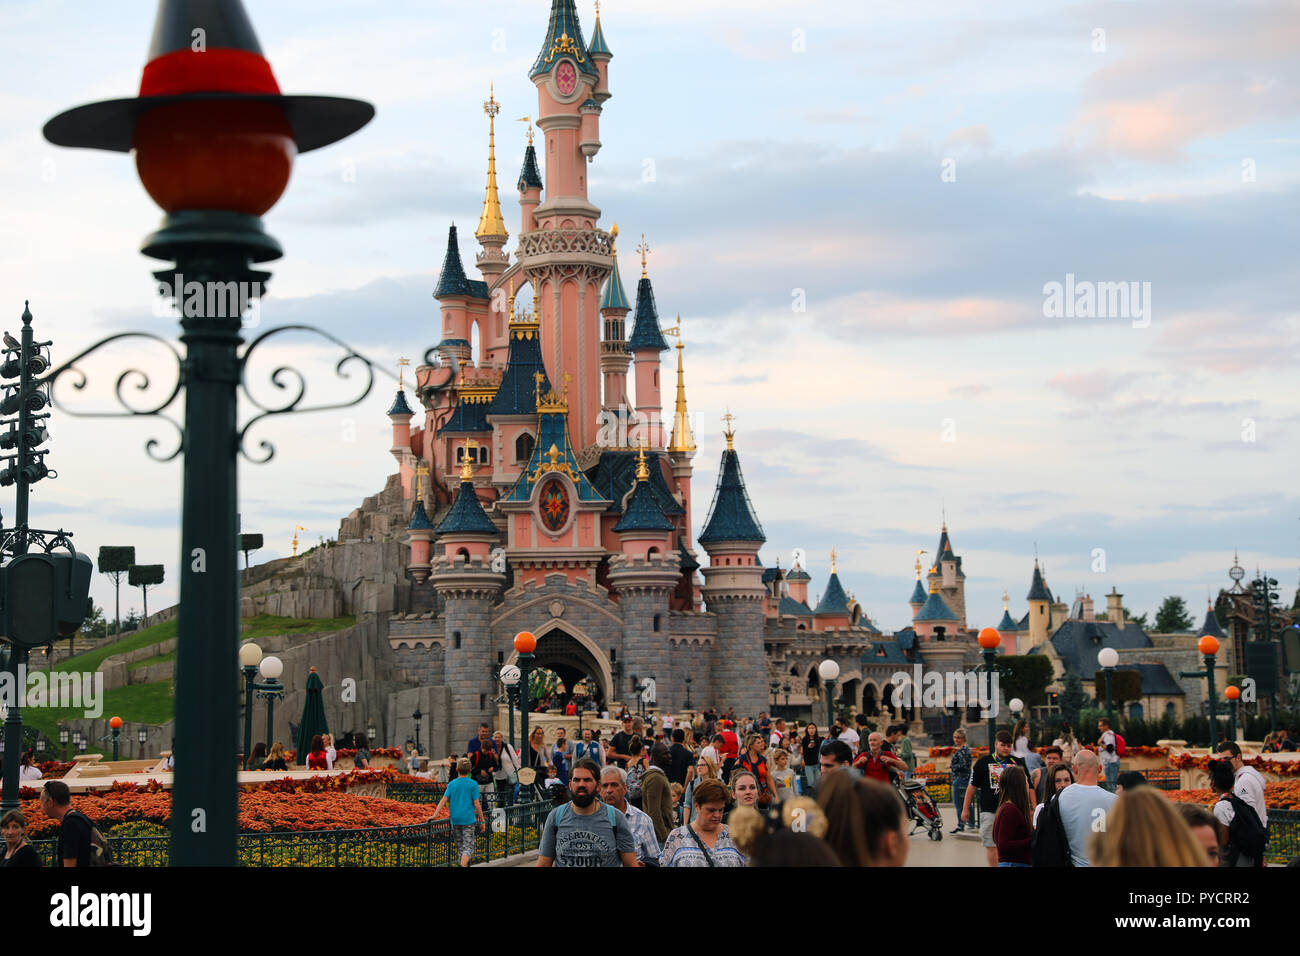 Marne-la-VallÃ©e, France - October 14, 2018: Sunset At  Sleeping Beauty Castle In Disneyland Paris (Euro Disney), Crowd Of People, Marne-la-VallÃ©e, Ã Stock Photo